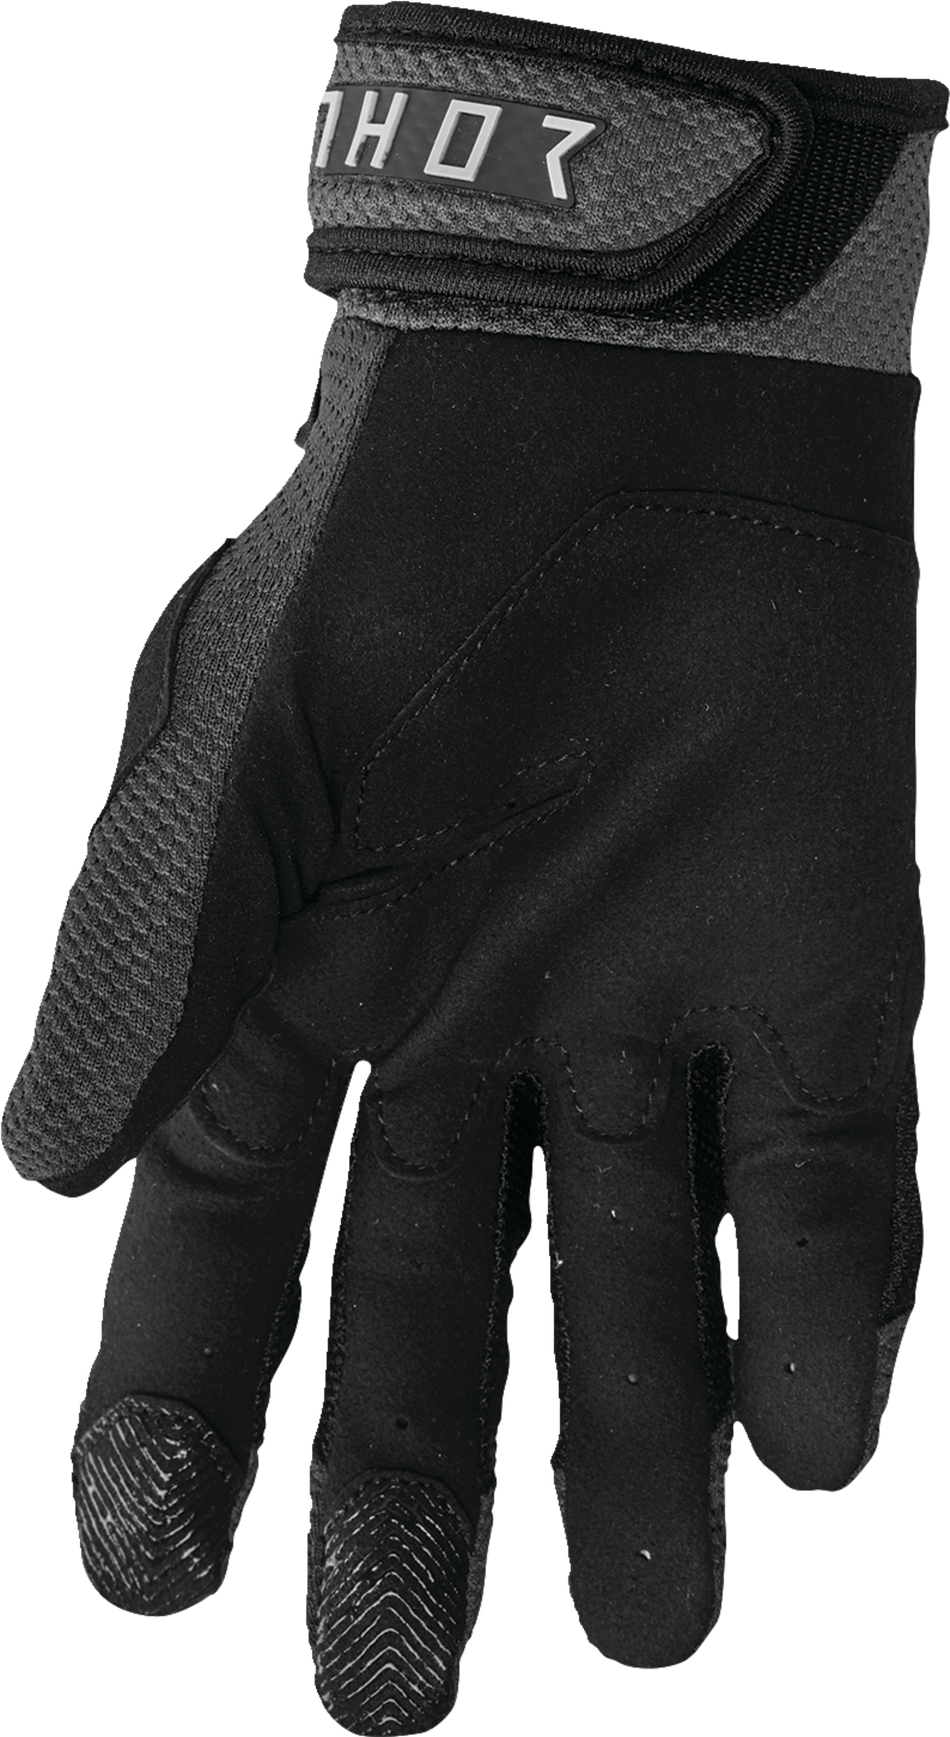 THOR Terrain Gloves - Black/Charcoal - Medium 3330-7281